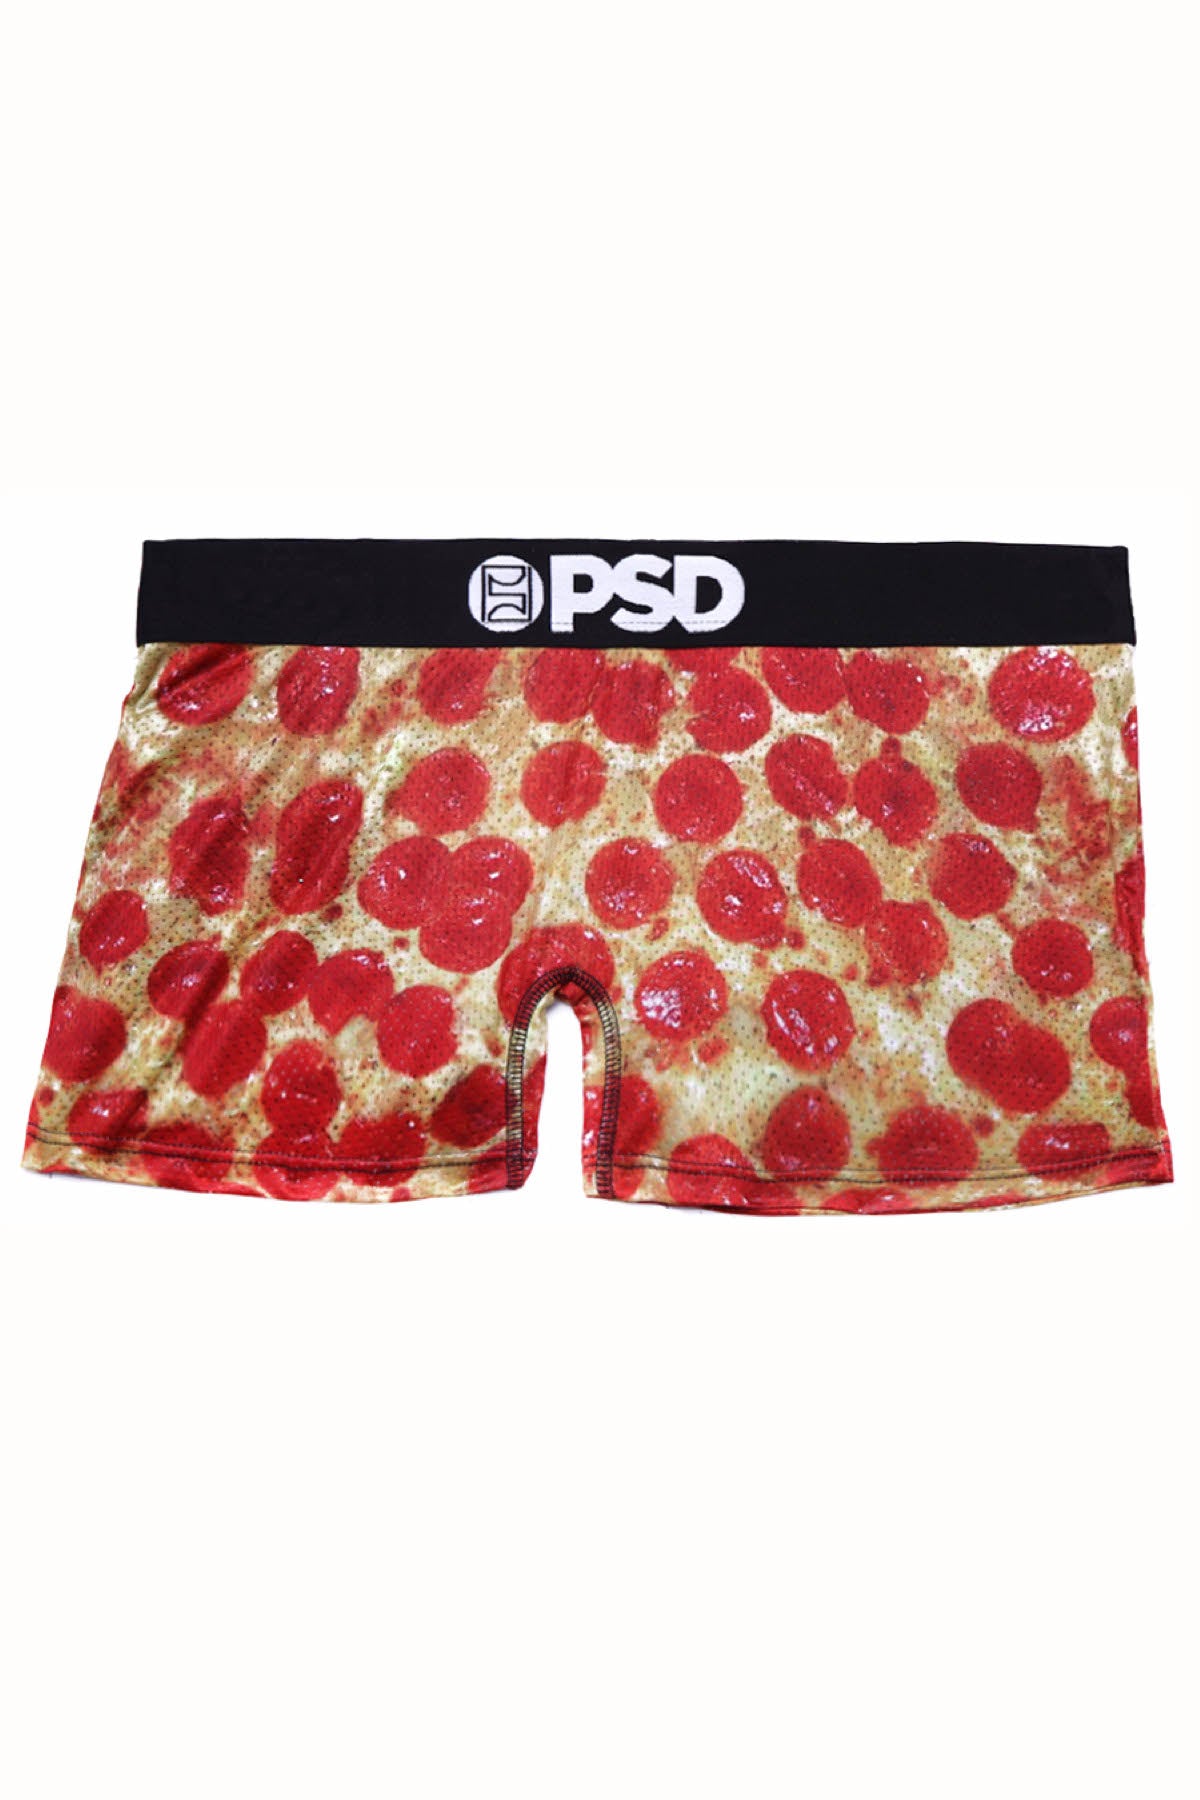 PSD Pizza Boyshort